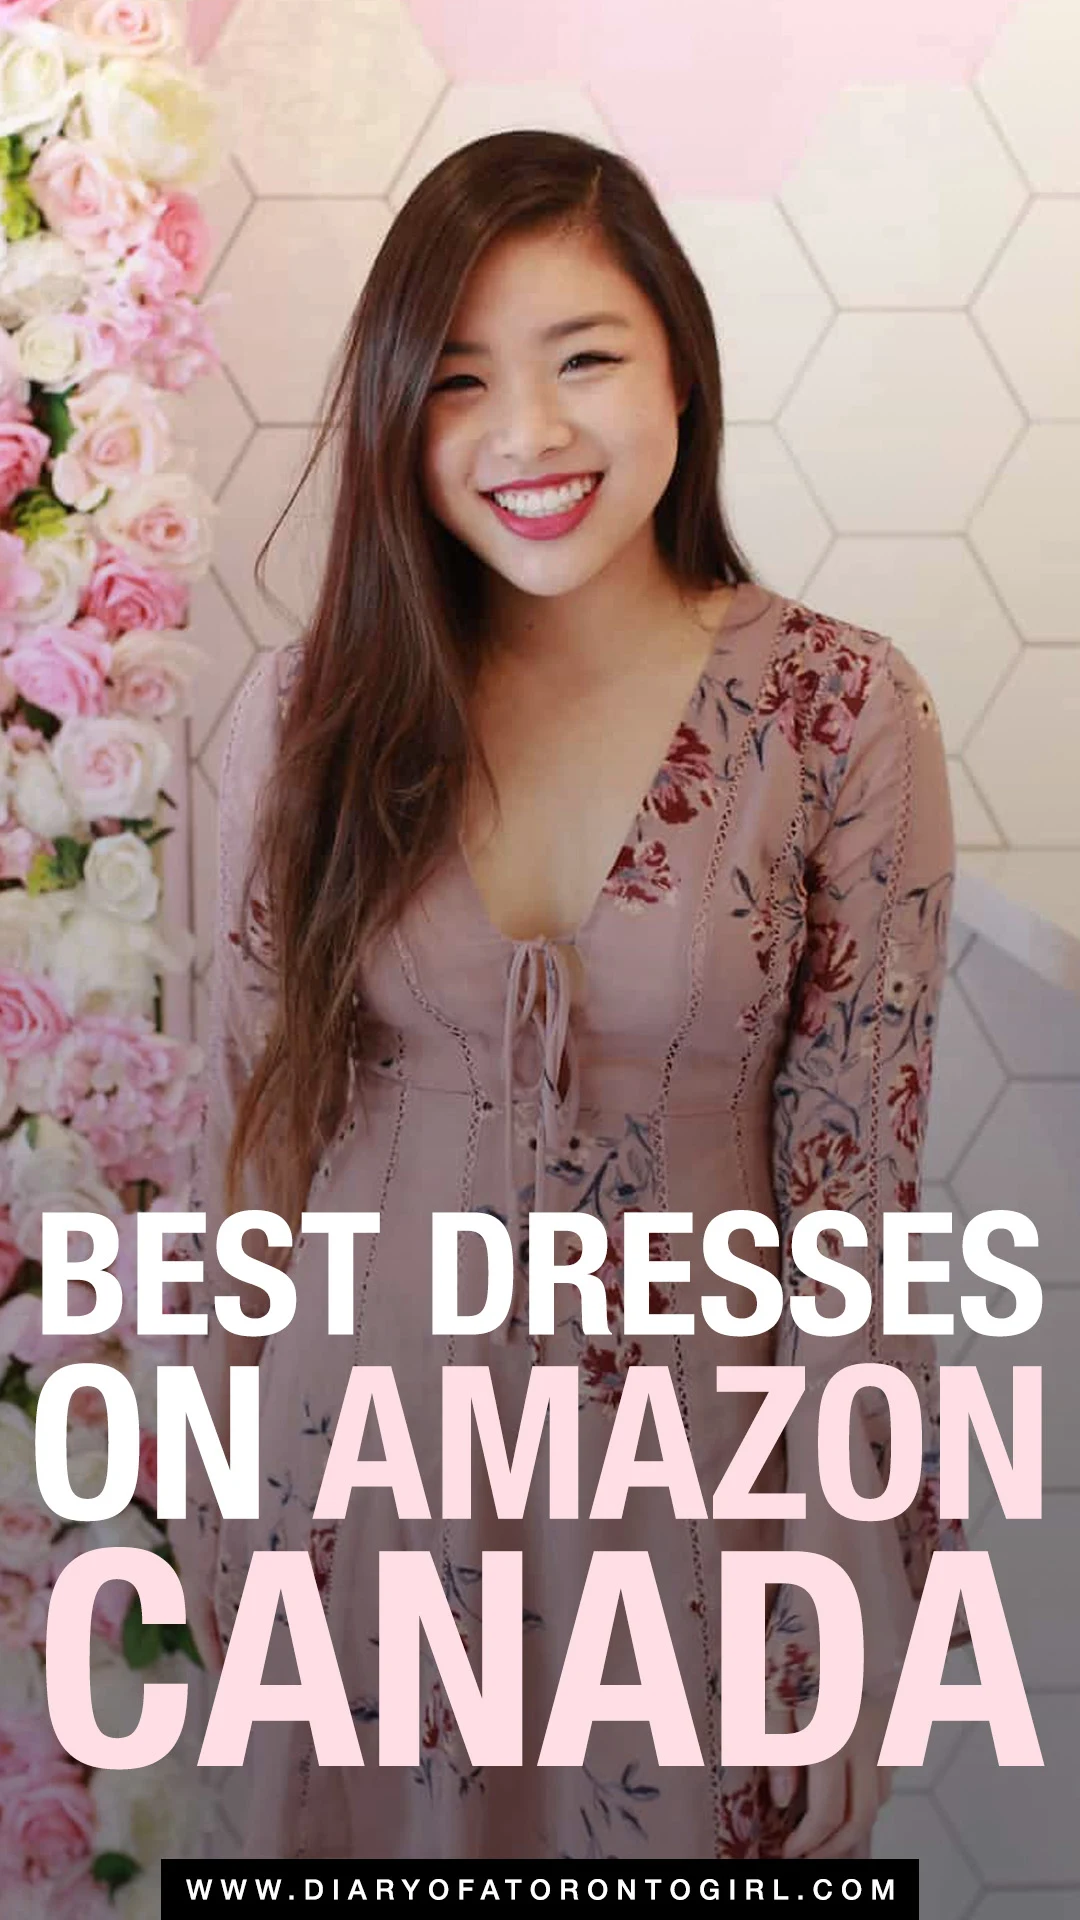 Best dresses on Amazon Canada